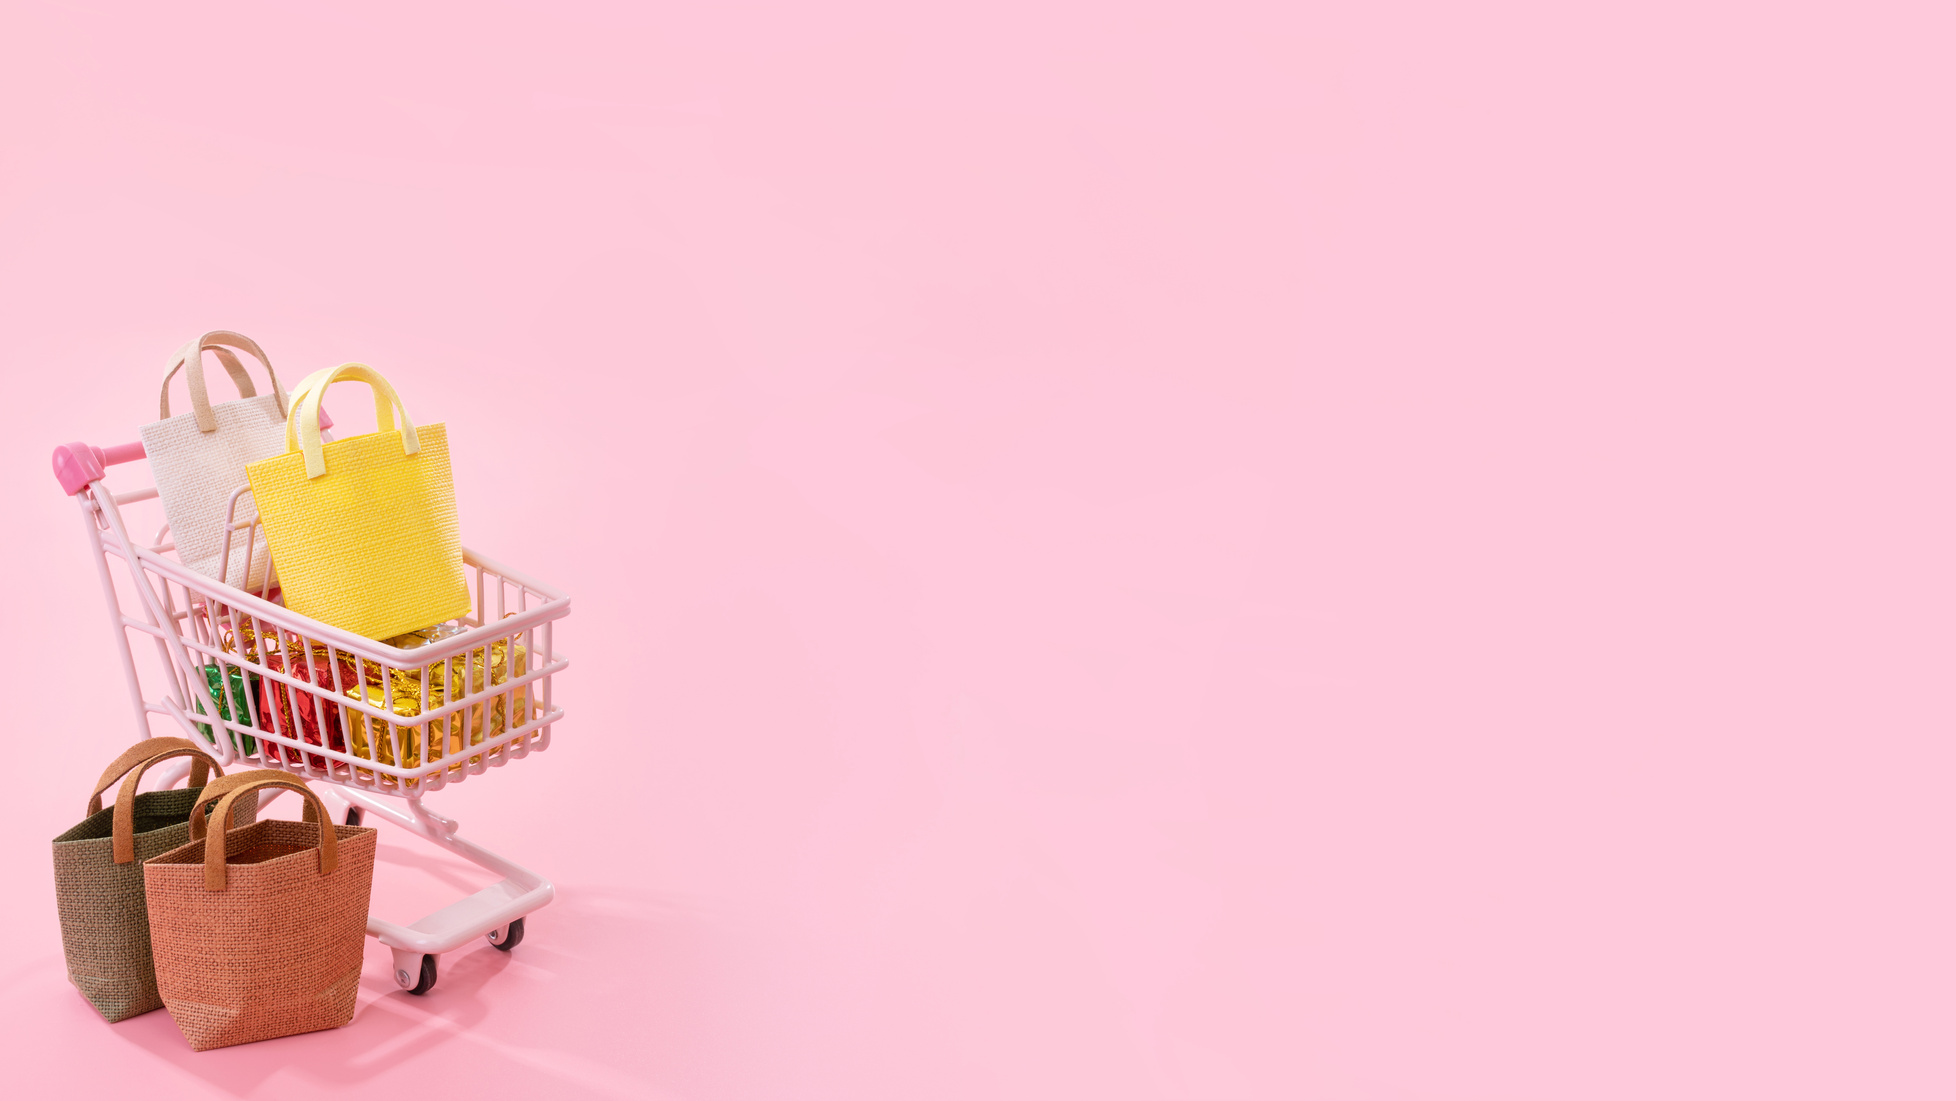 Mini Shopping Cart with Shopping Bag